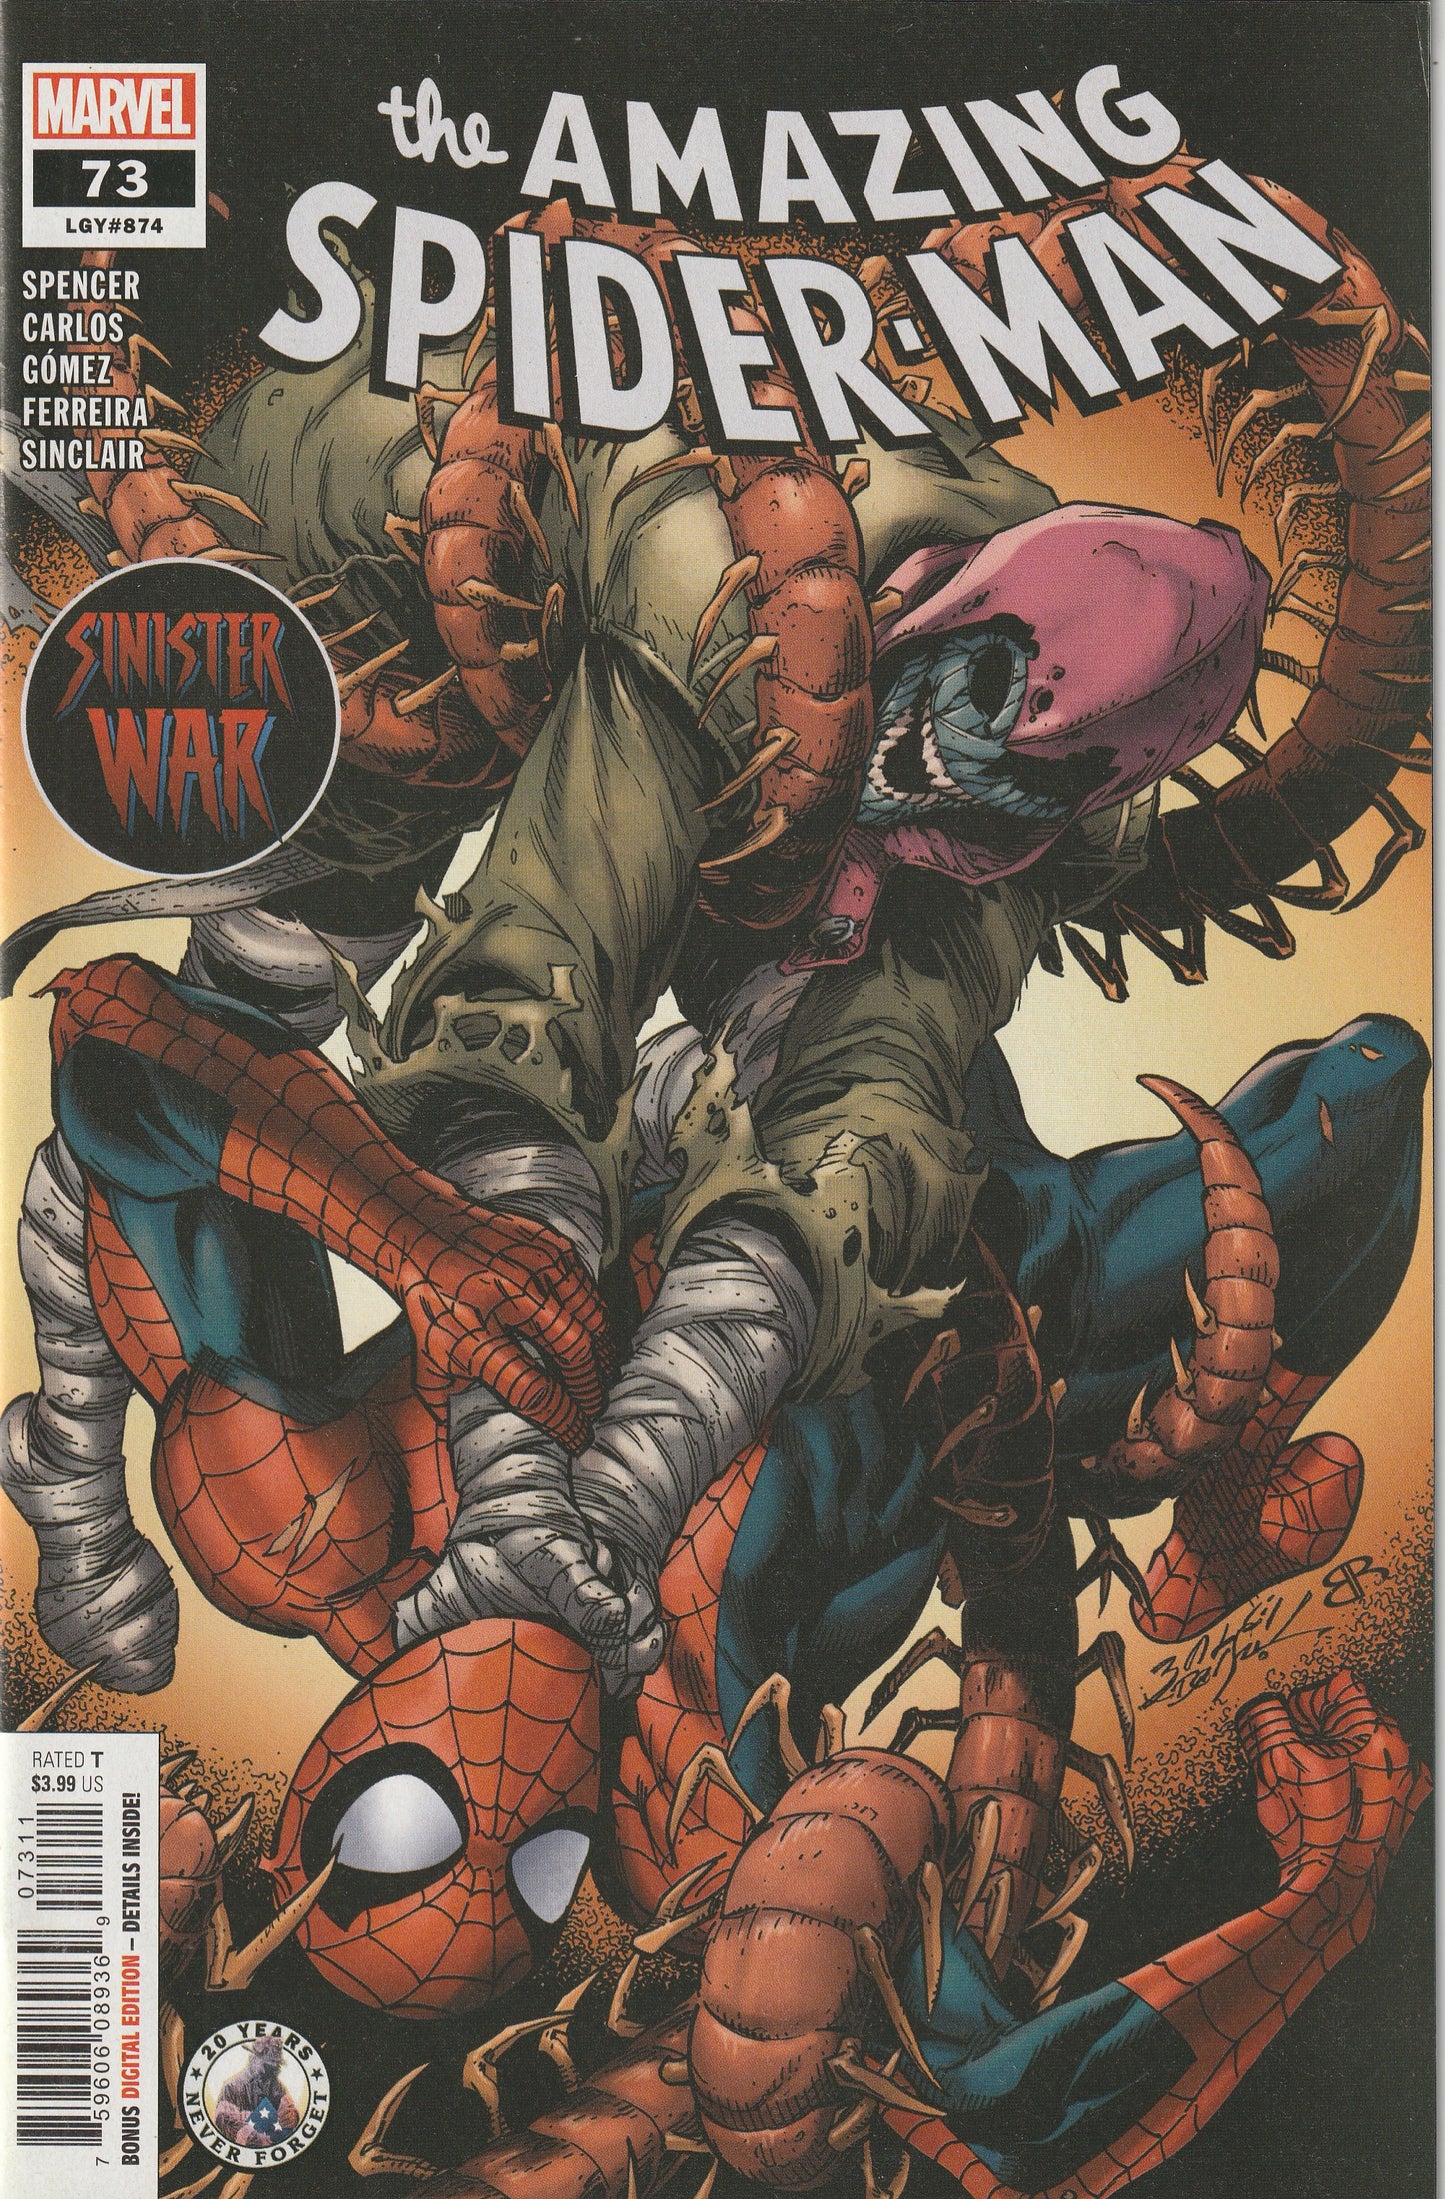 Amazing Spider-Man #73 (LGY #874) (2021)